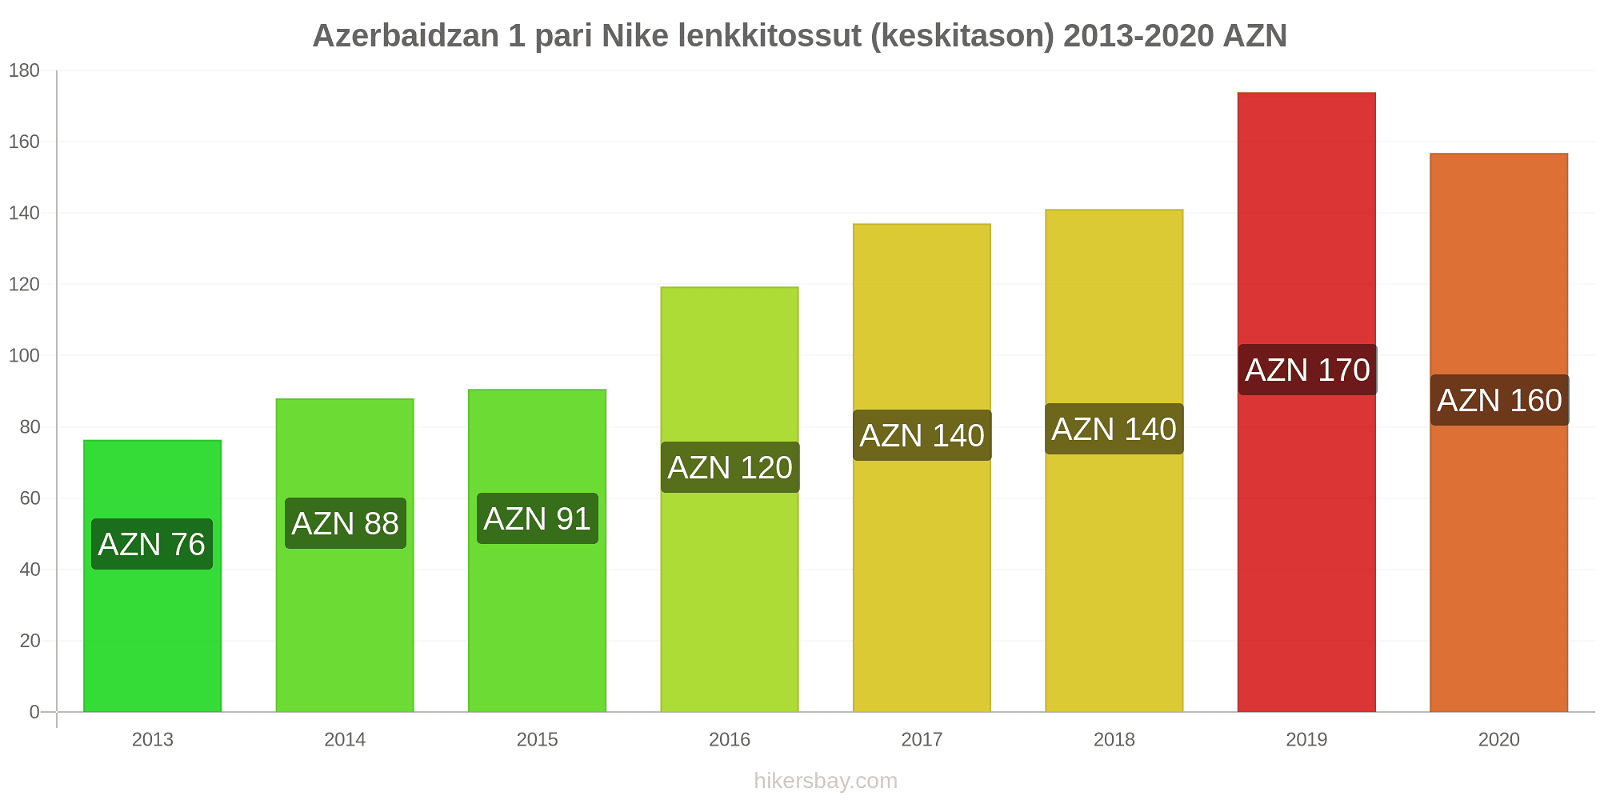 Azerbaidzan hintojen muutokset 1 pari Nike lenkkitossut (keskitason) hikersbay.com